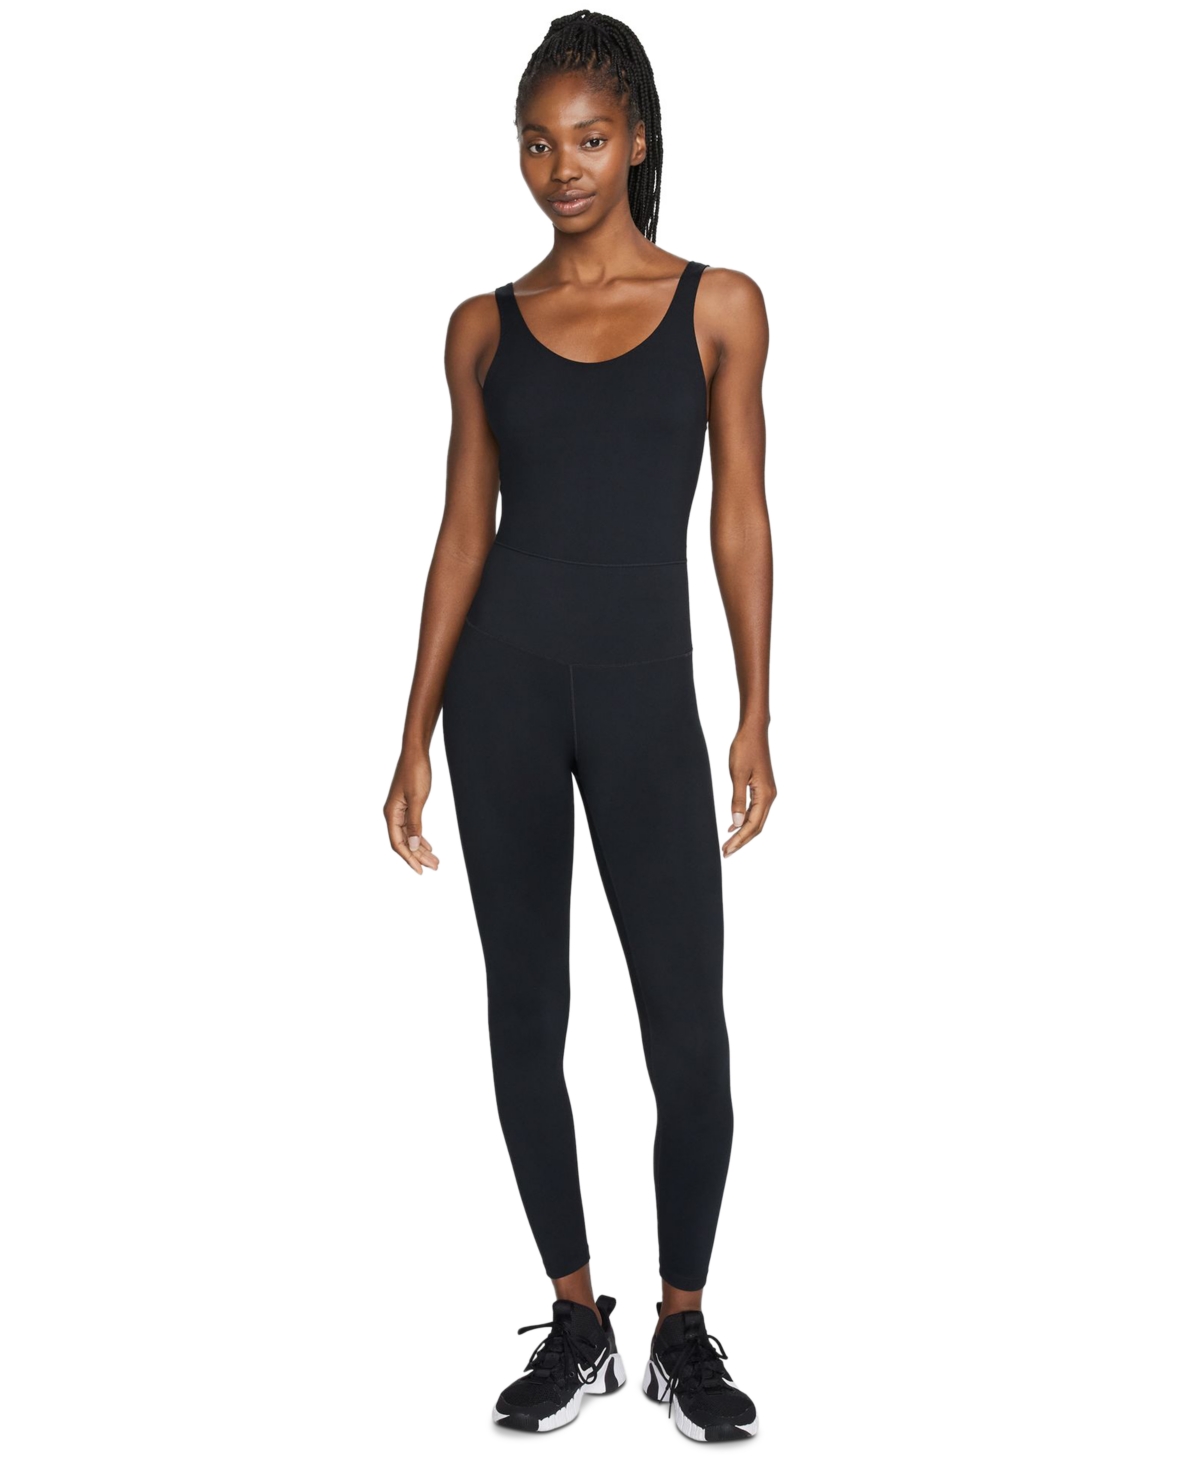 Women's Solid One Dri-fit Scoop-Neck Bodysuit - Black/black/black